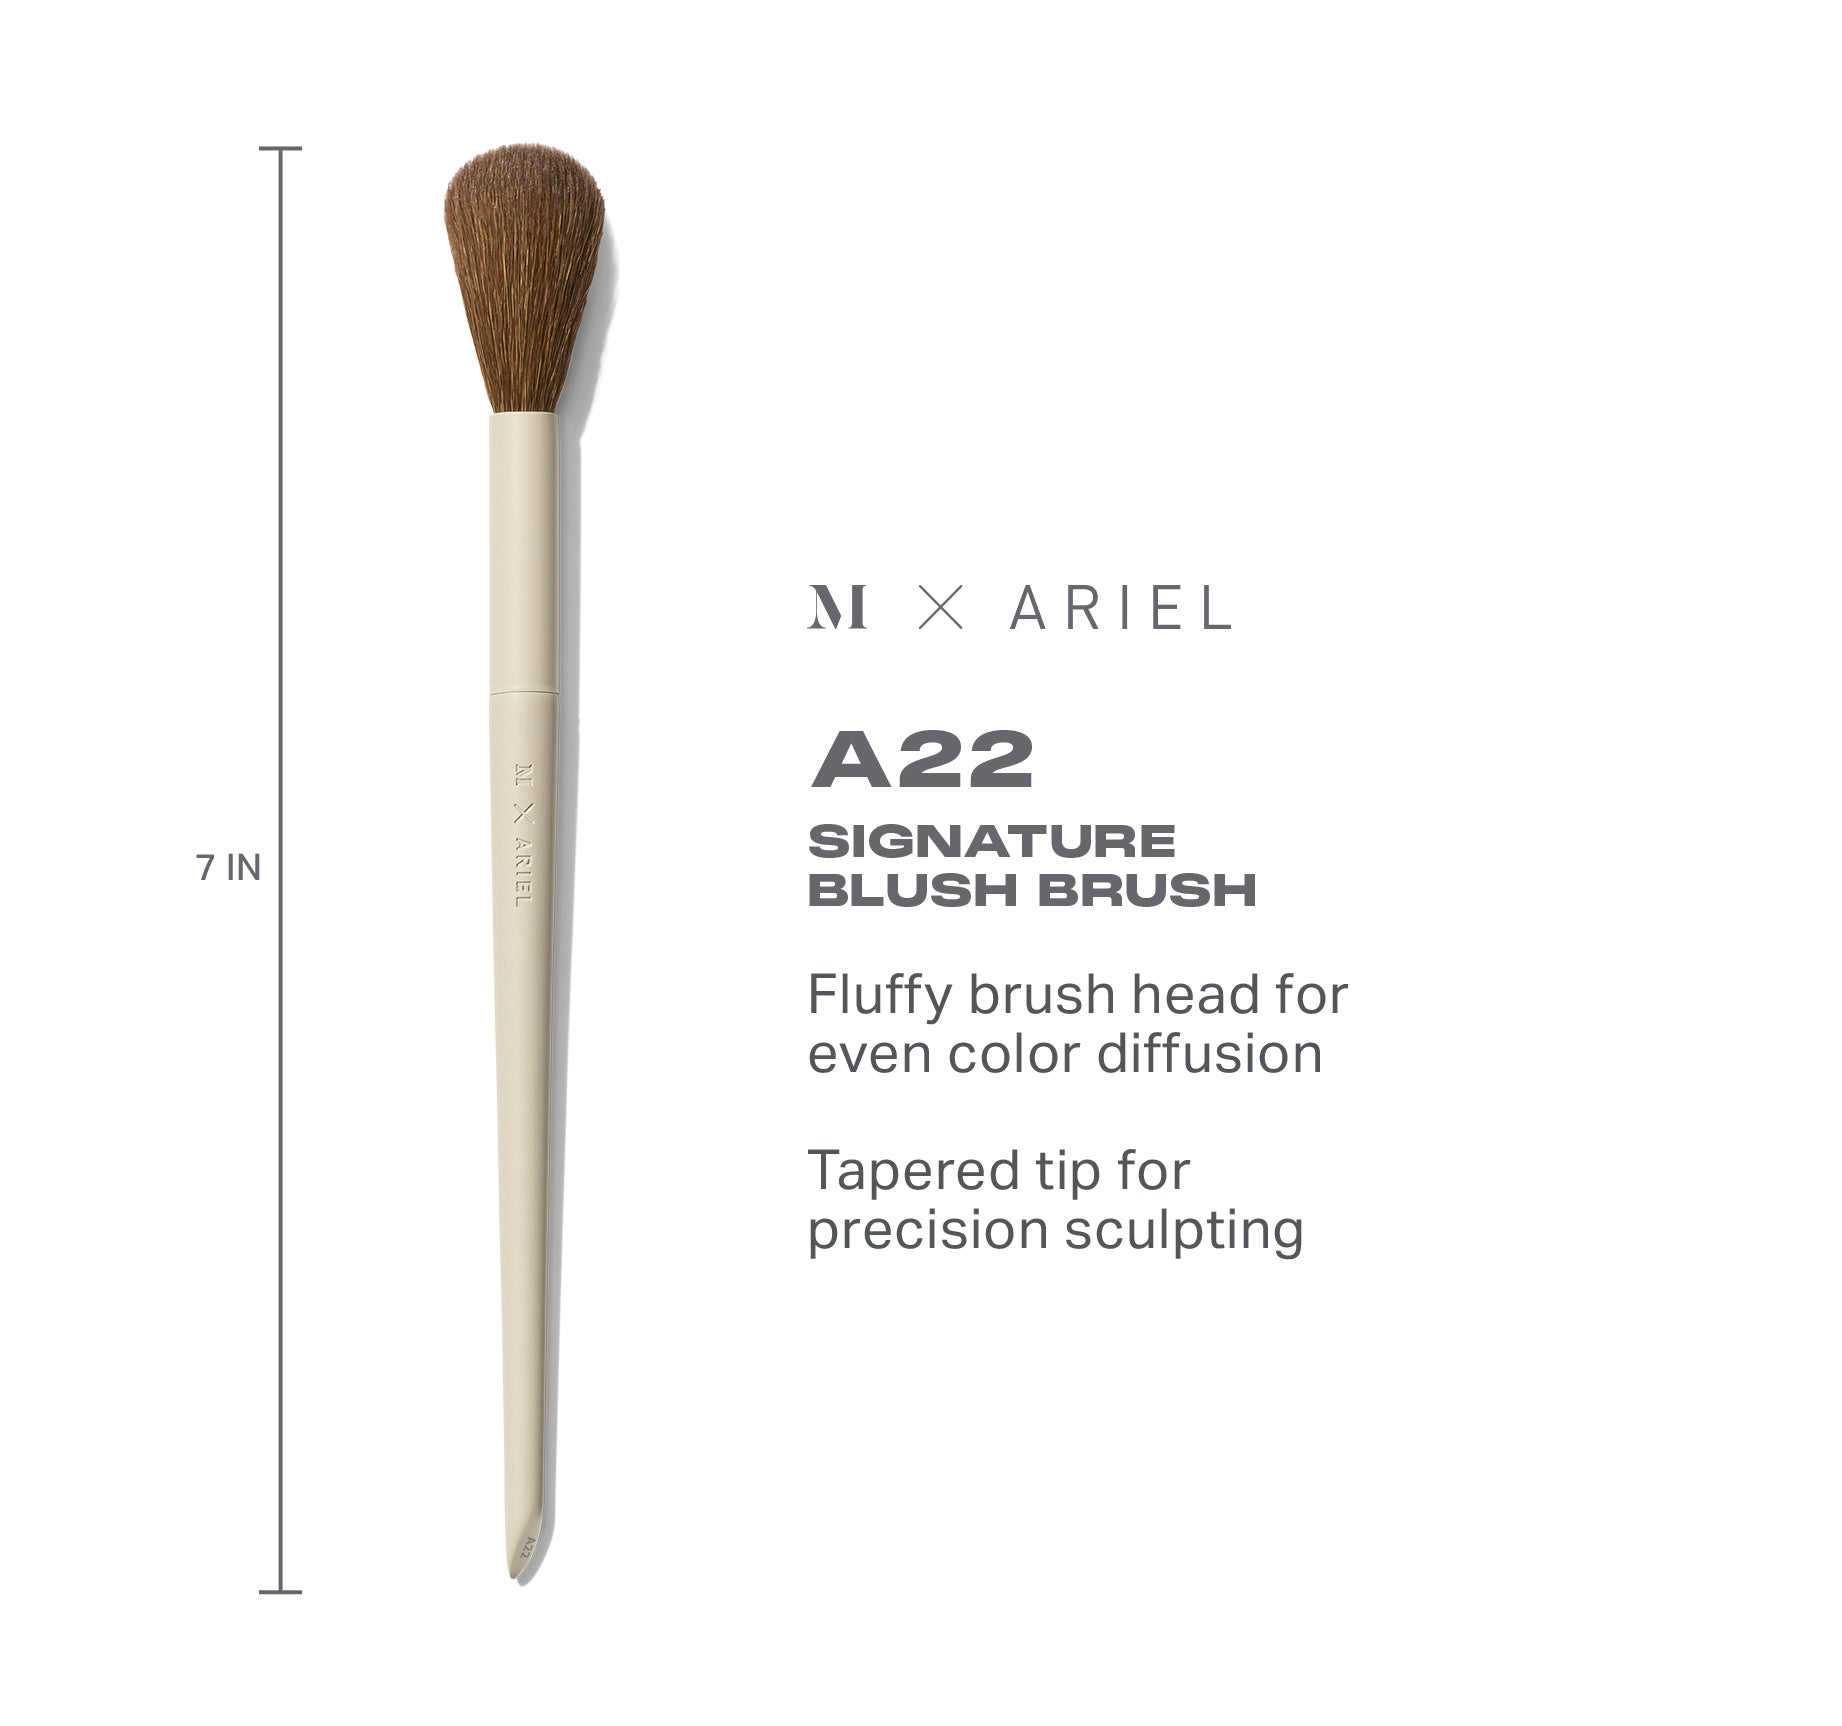 Morphe X Ariel A22 Blush Brush - Image 4